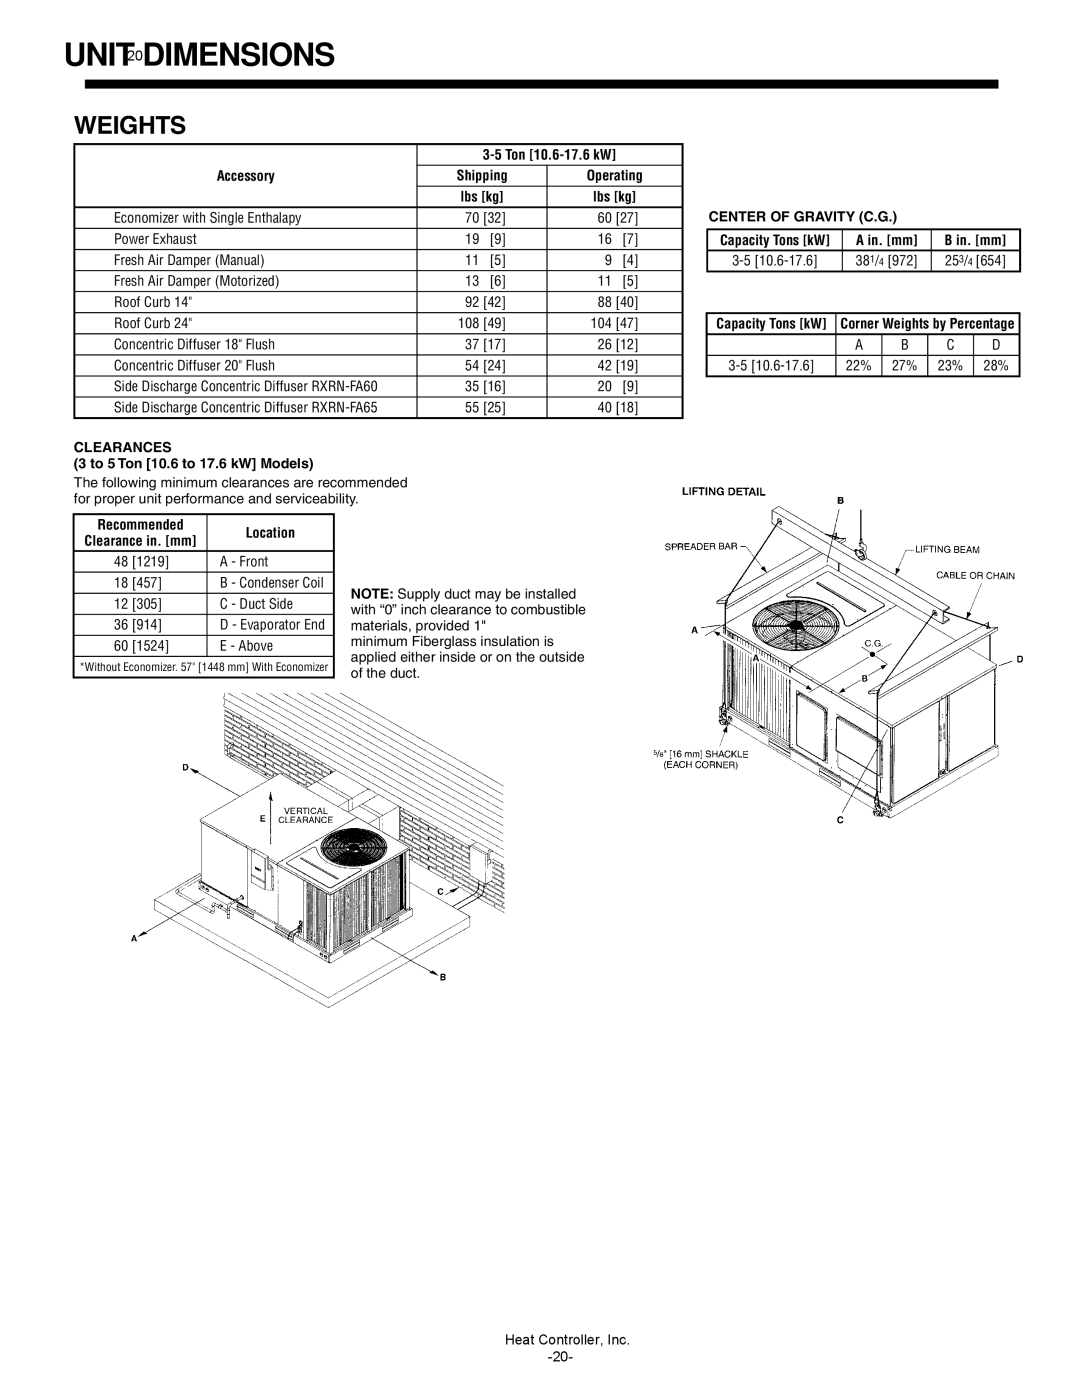 Heat Controller TGC048C-3K-135, TGC060C-4K-135, TGC048C-1K-135, TGC042C-4K-120, TGC060C-3K-135 manual UNIT20DIMENSIONS, Weights 